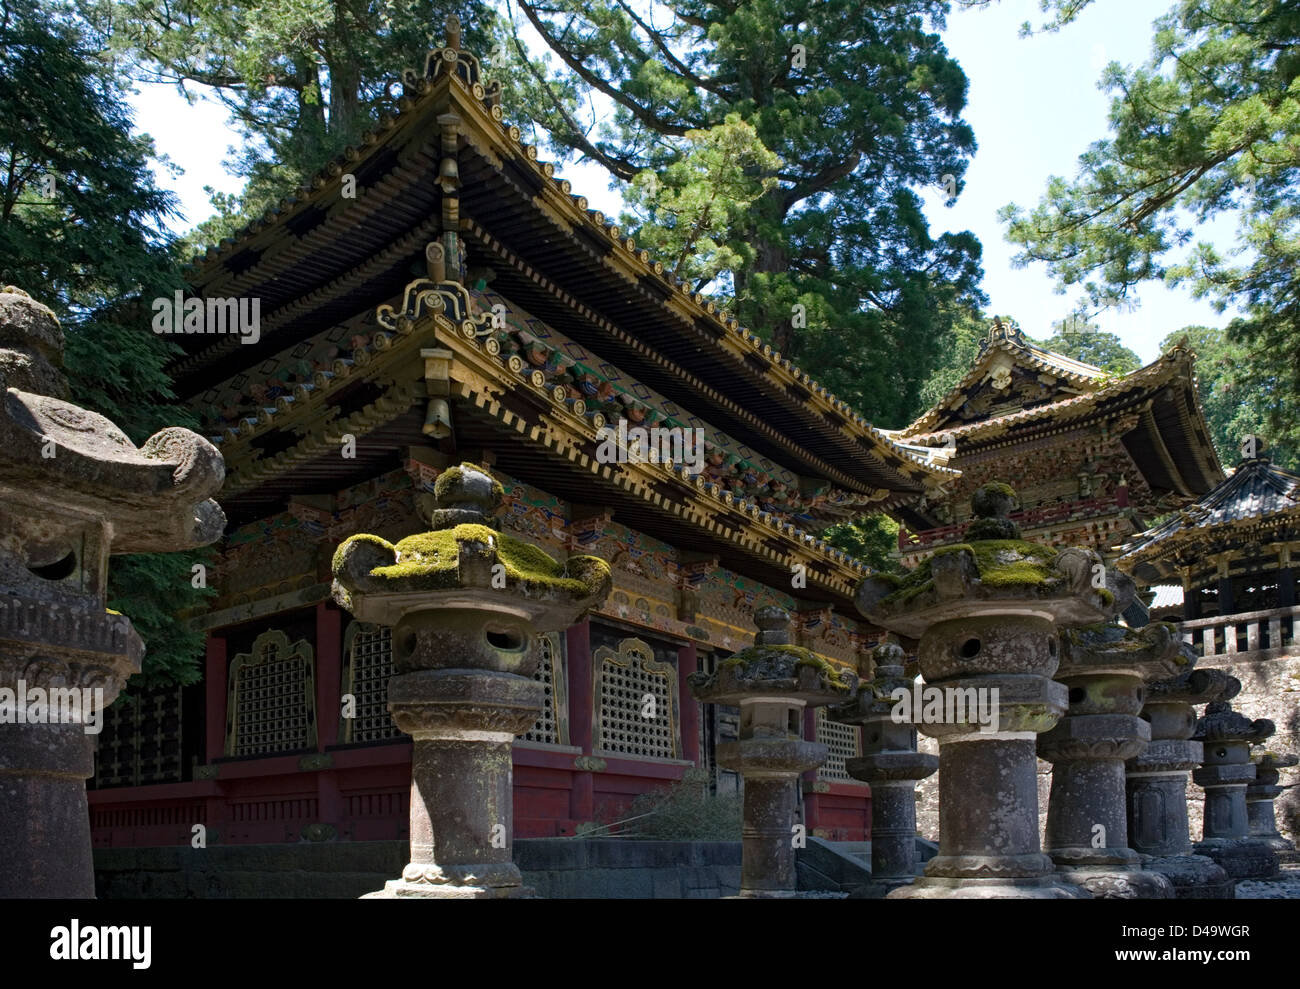 Ornate gold decorated sacred buildings surrounded by stone lanterns at Toshogu Jinja Shrine in Nikko, Tochigi, Japan. Stock Photo